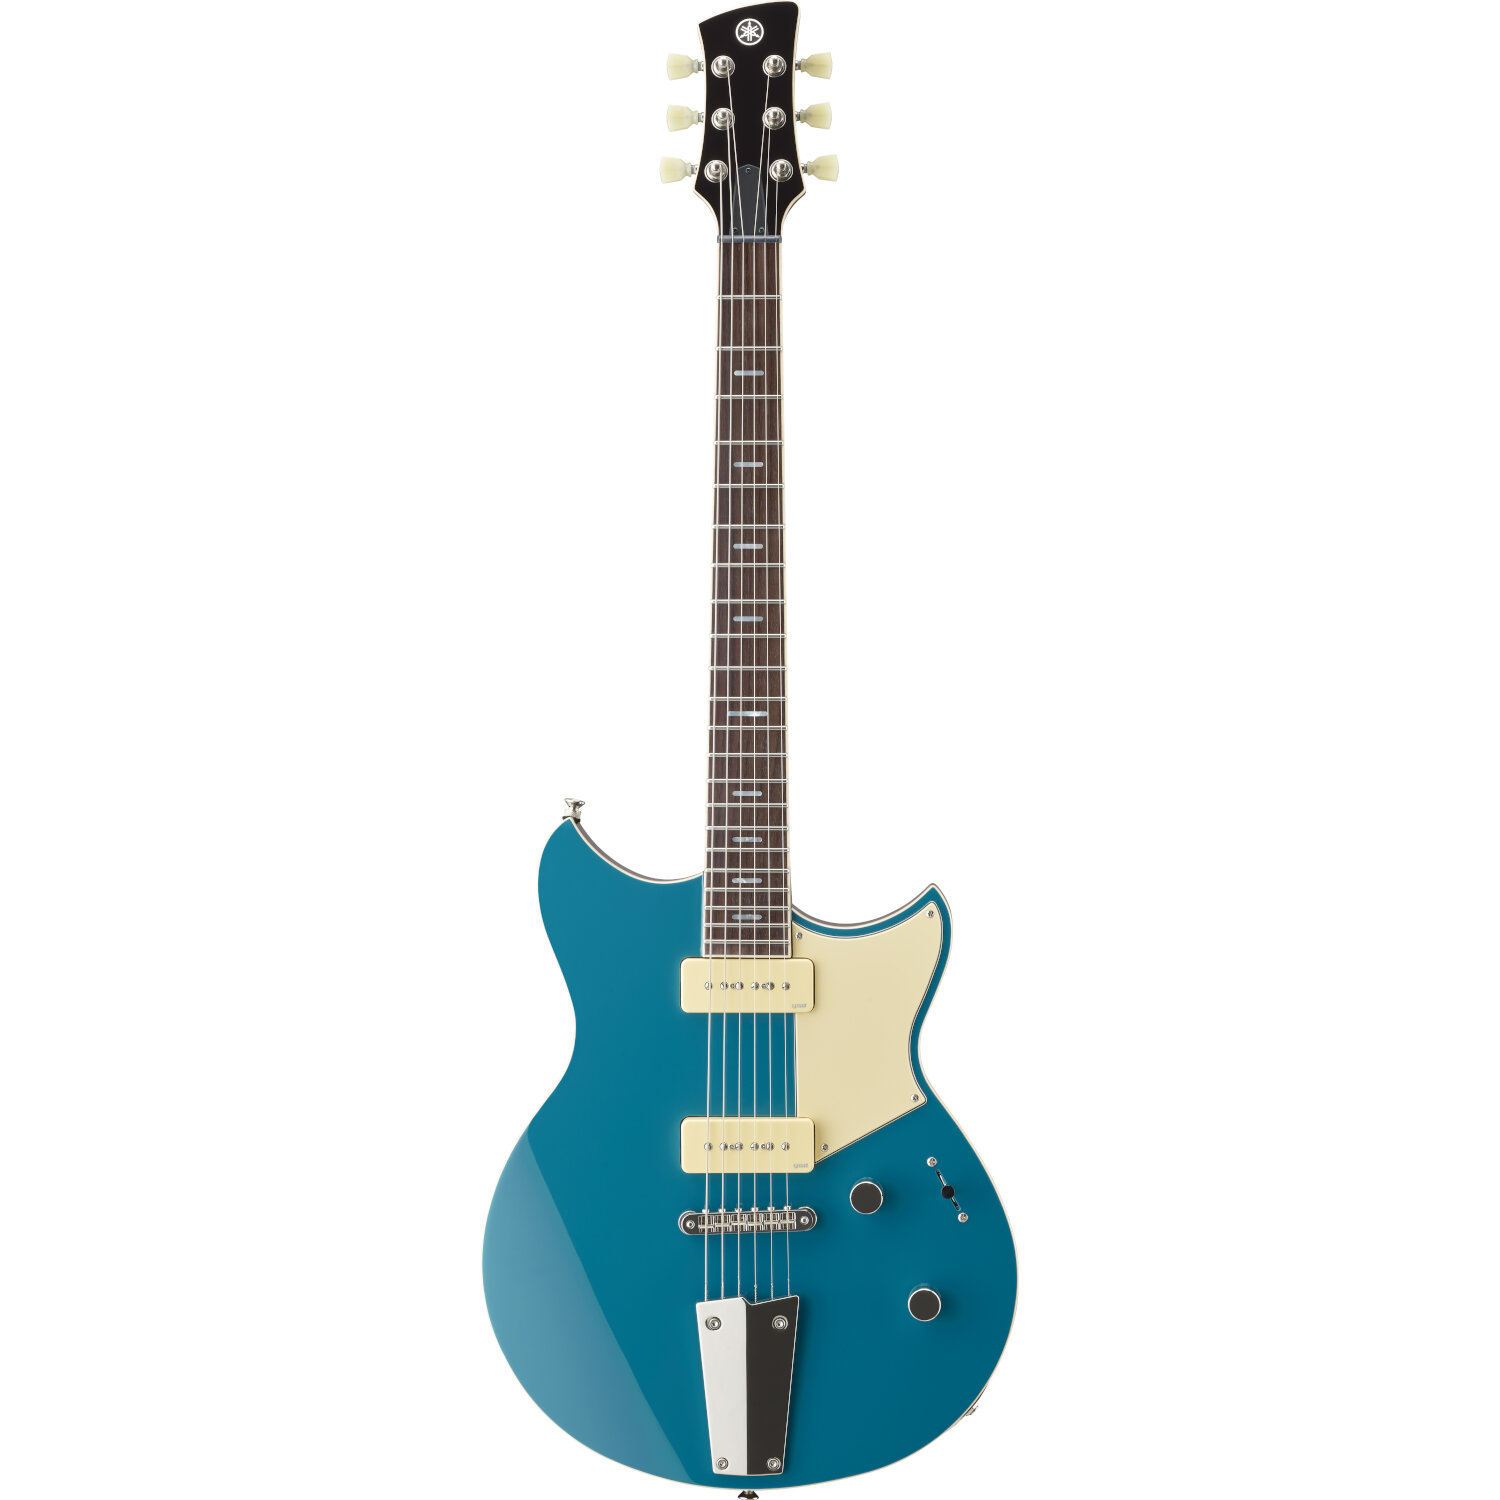 Yamaha Revstar Professional RSP02T Swift Blue elektrische gitaar met hardshell koffer